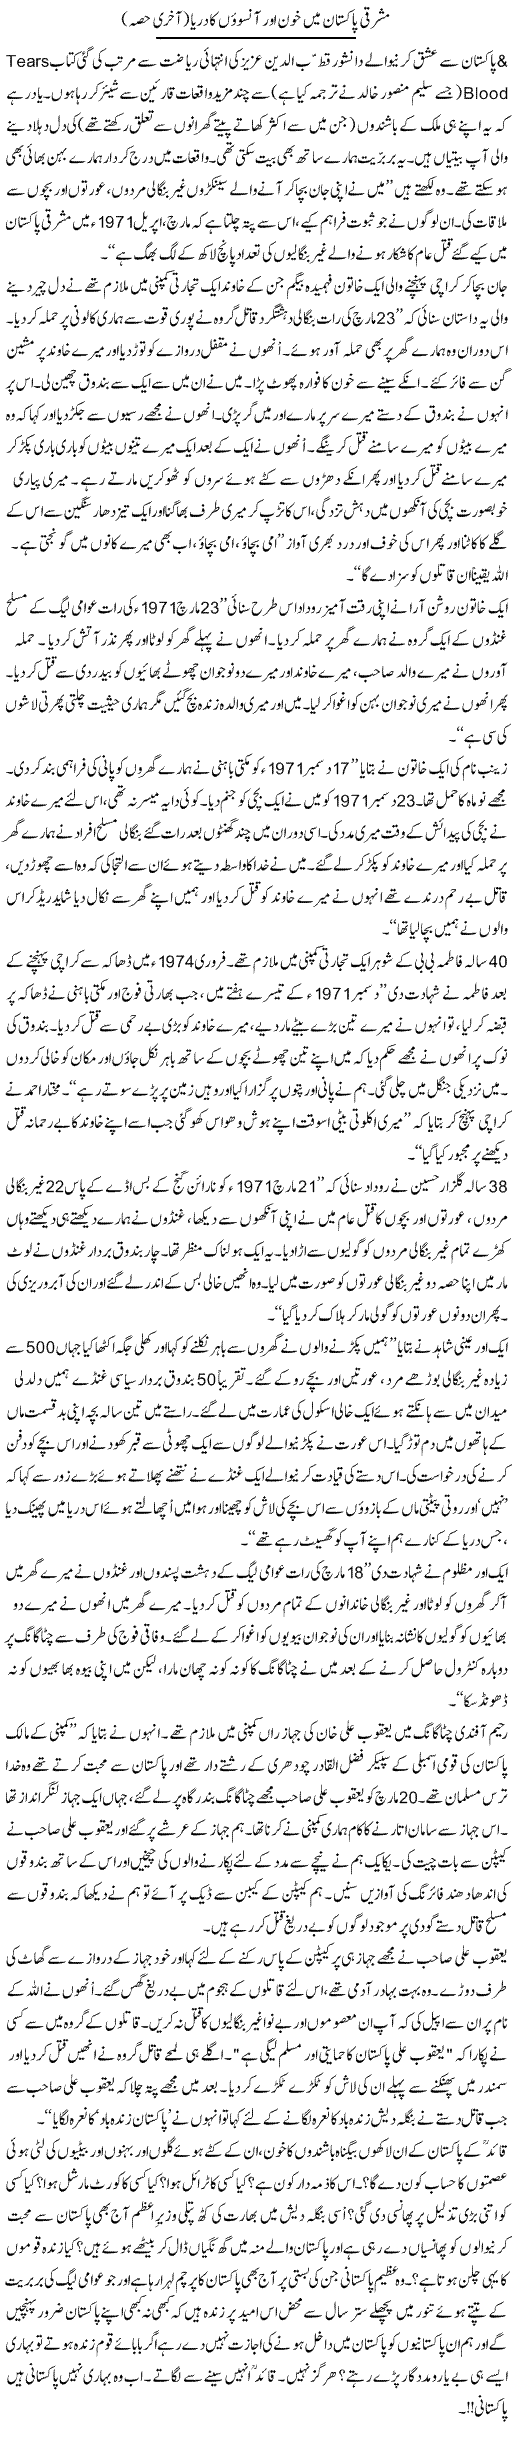 Mashriqi Pakistan Mein Khoon Aur Aansuon Ka Darya (2) | Zulfiqar Ahmed Cheema | Daily Urdu Columns